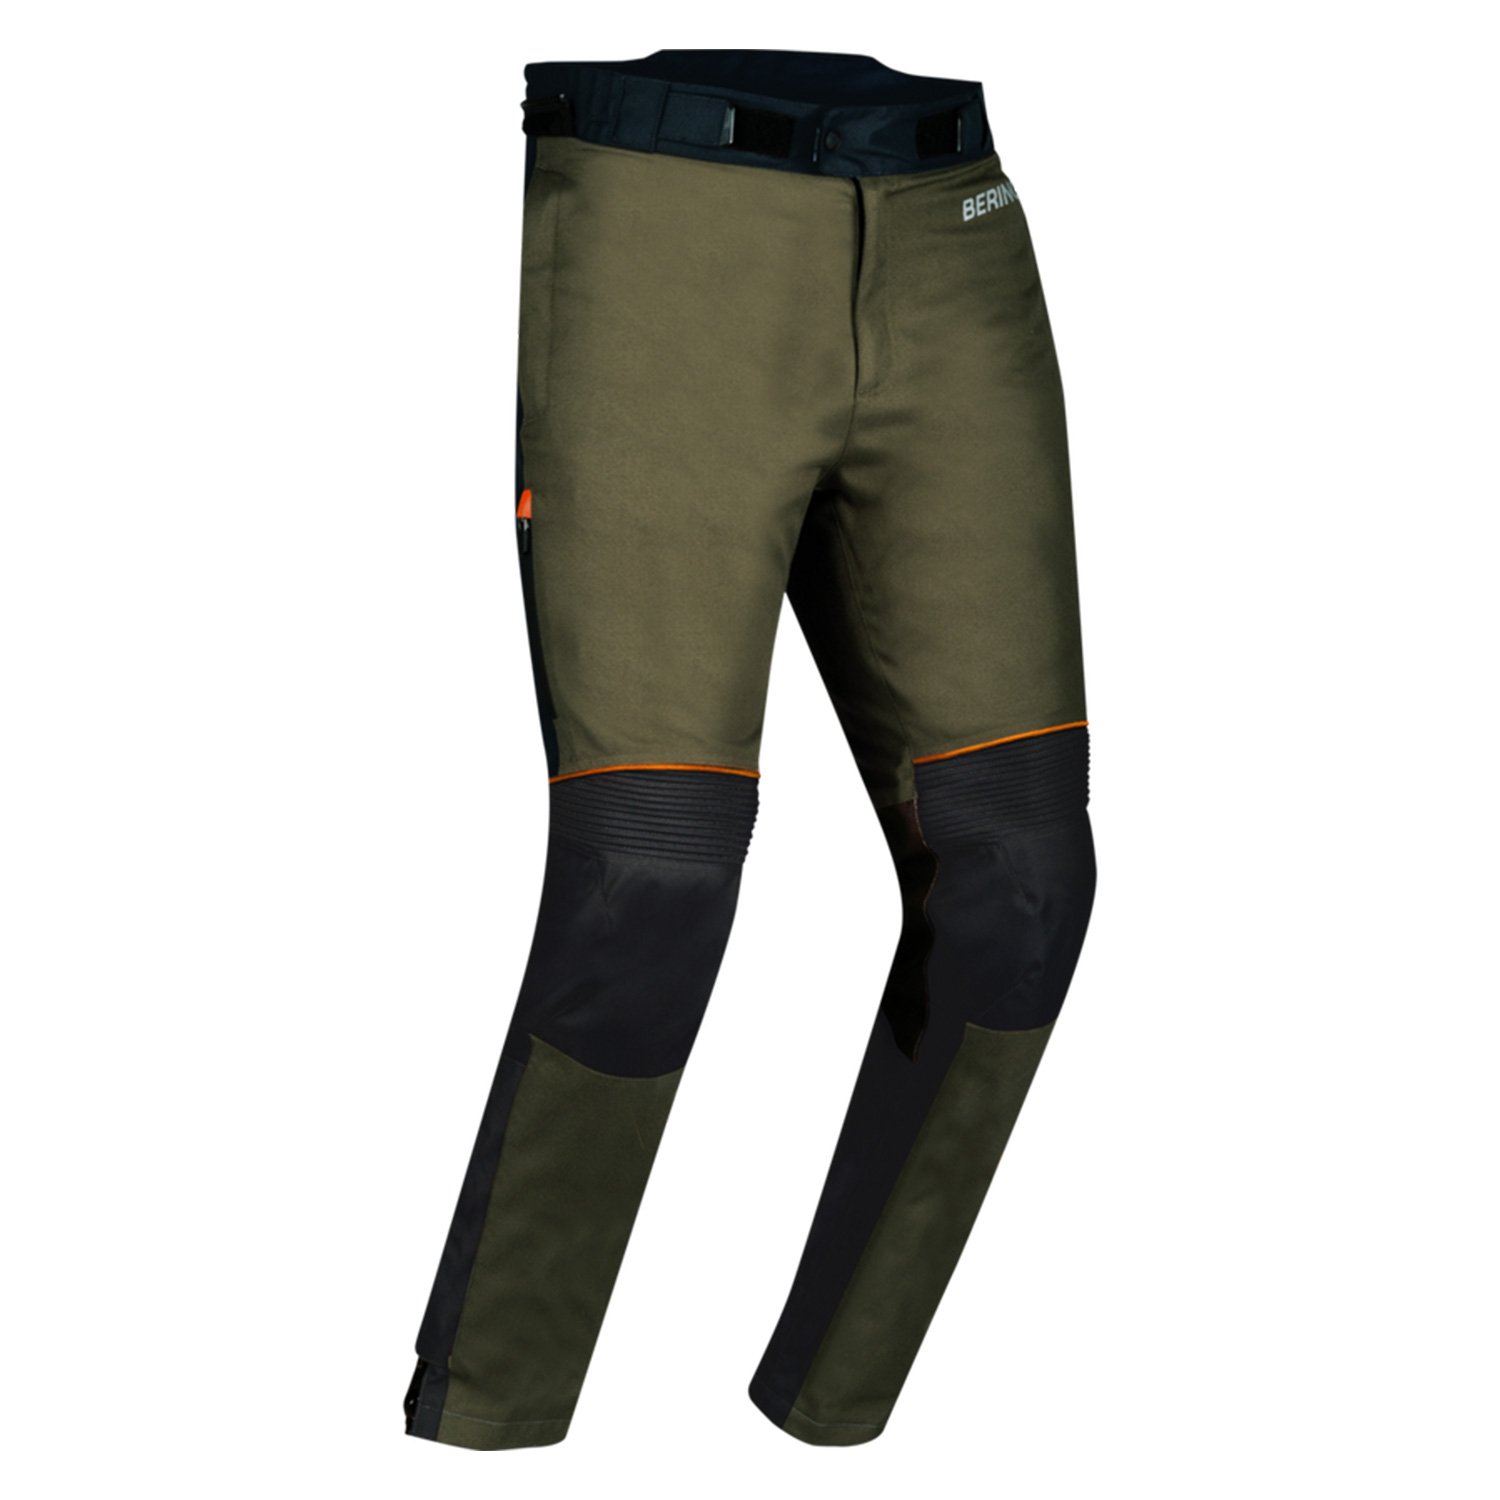 Image of Bering Zephyr Trousers Black Khaki Orange Size L ID 3660815180792